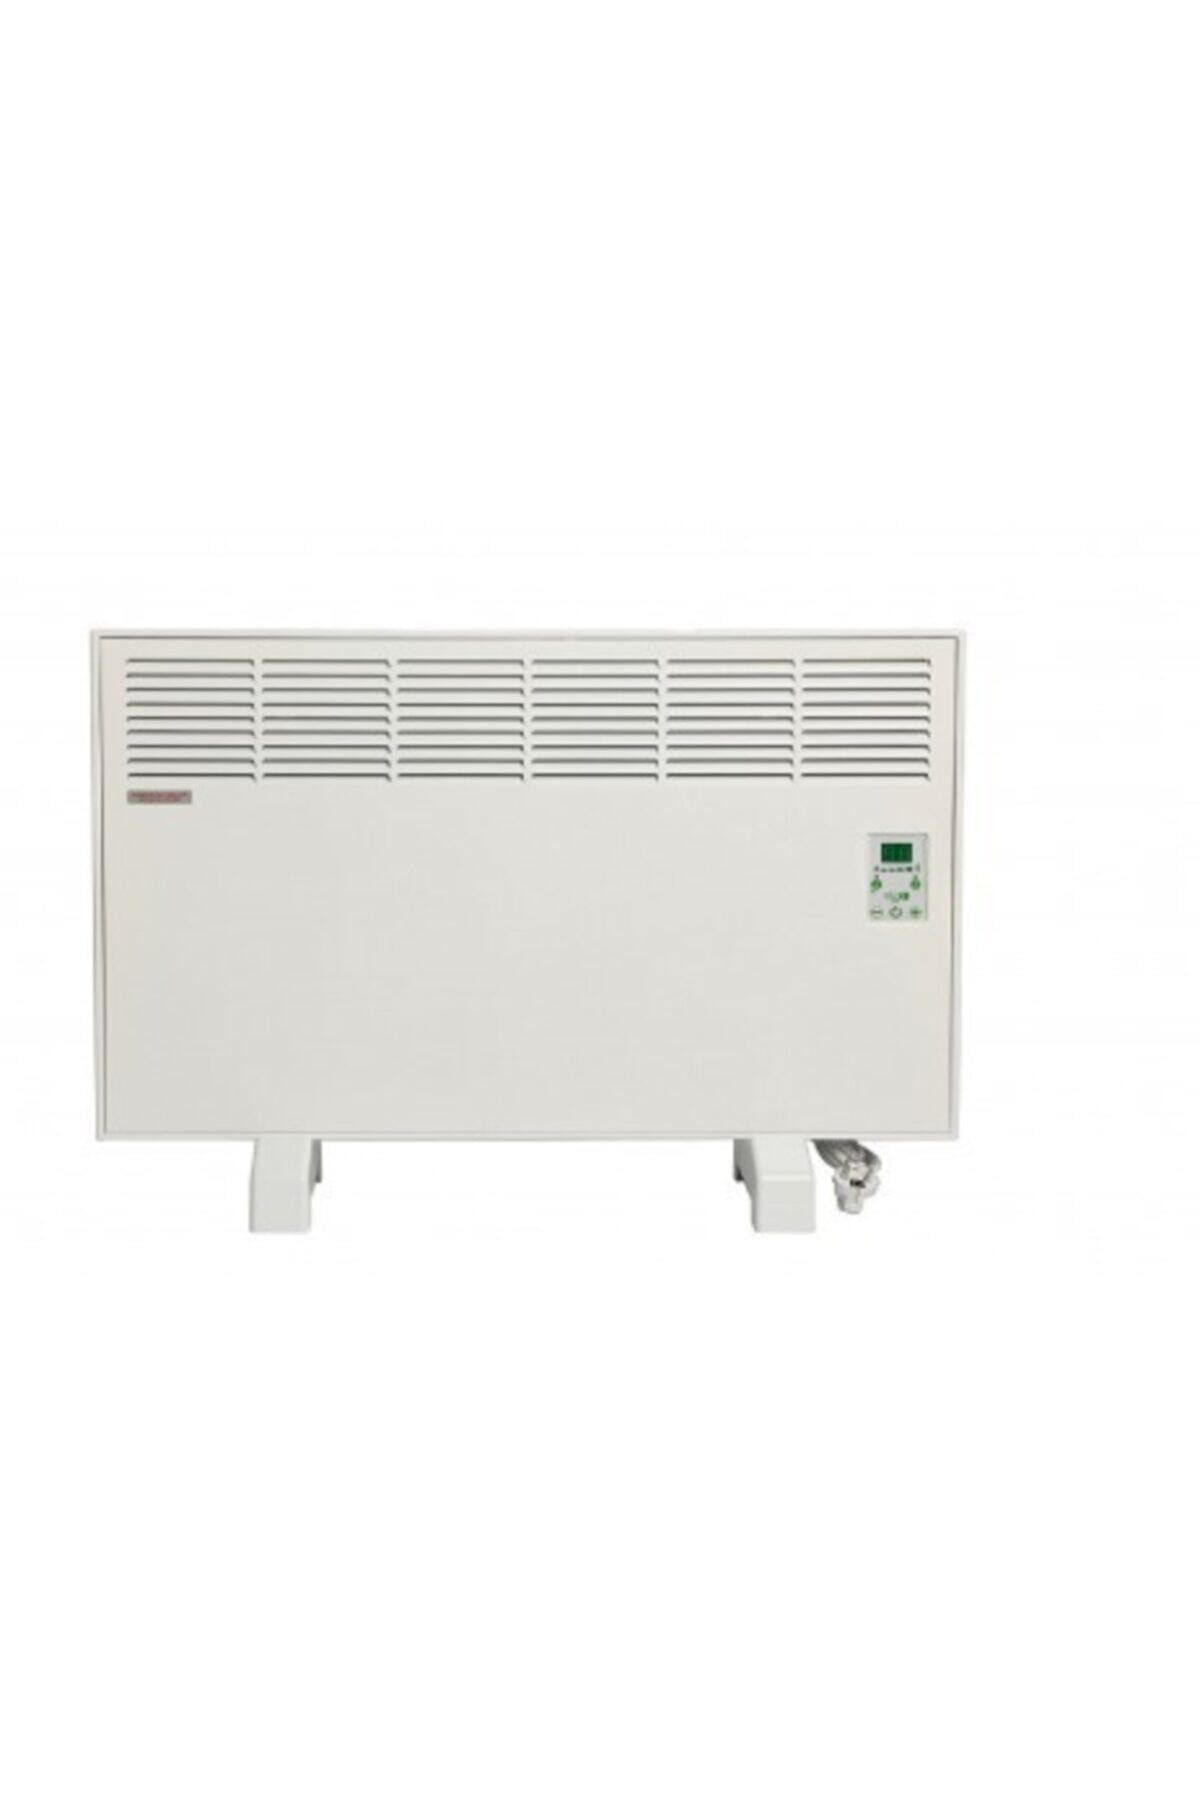 Vigo I Elektrikli Panel Konvektör Isıtıcı Dijital 1500 Watt Beyaz Epk4570e15b